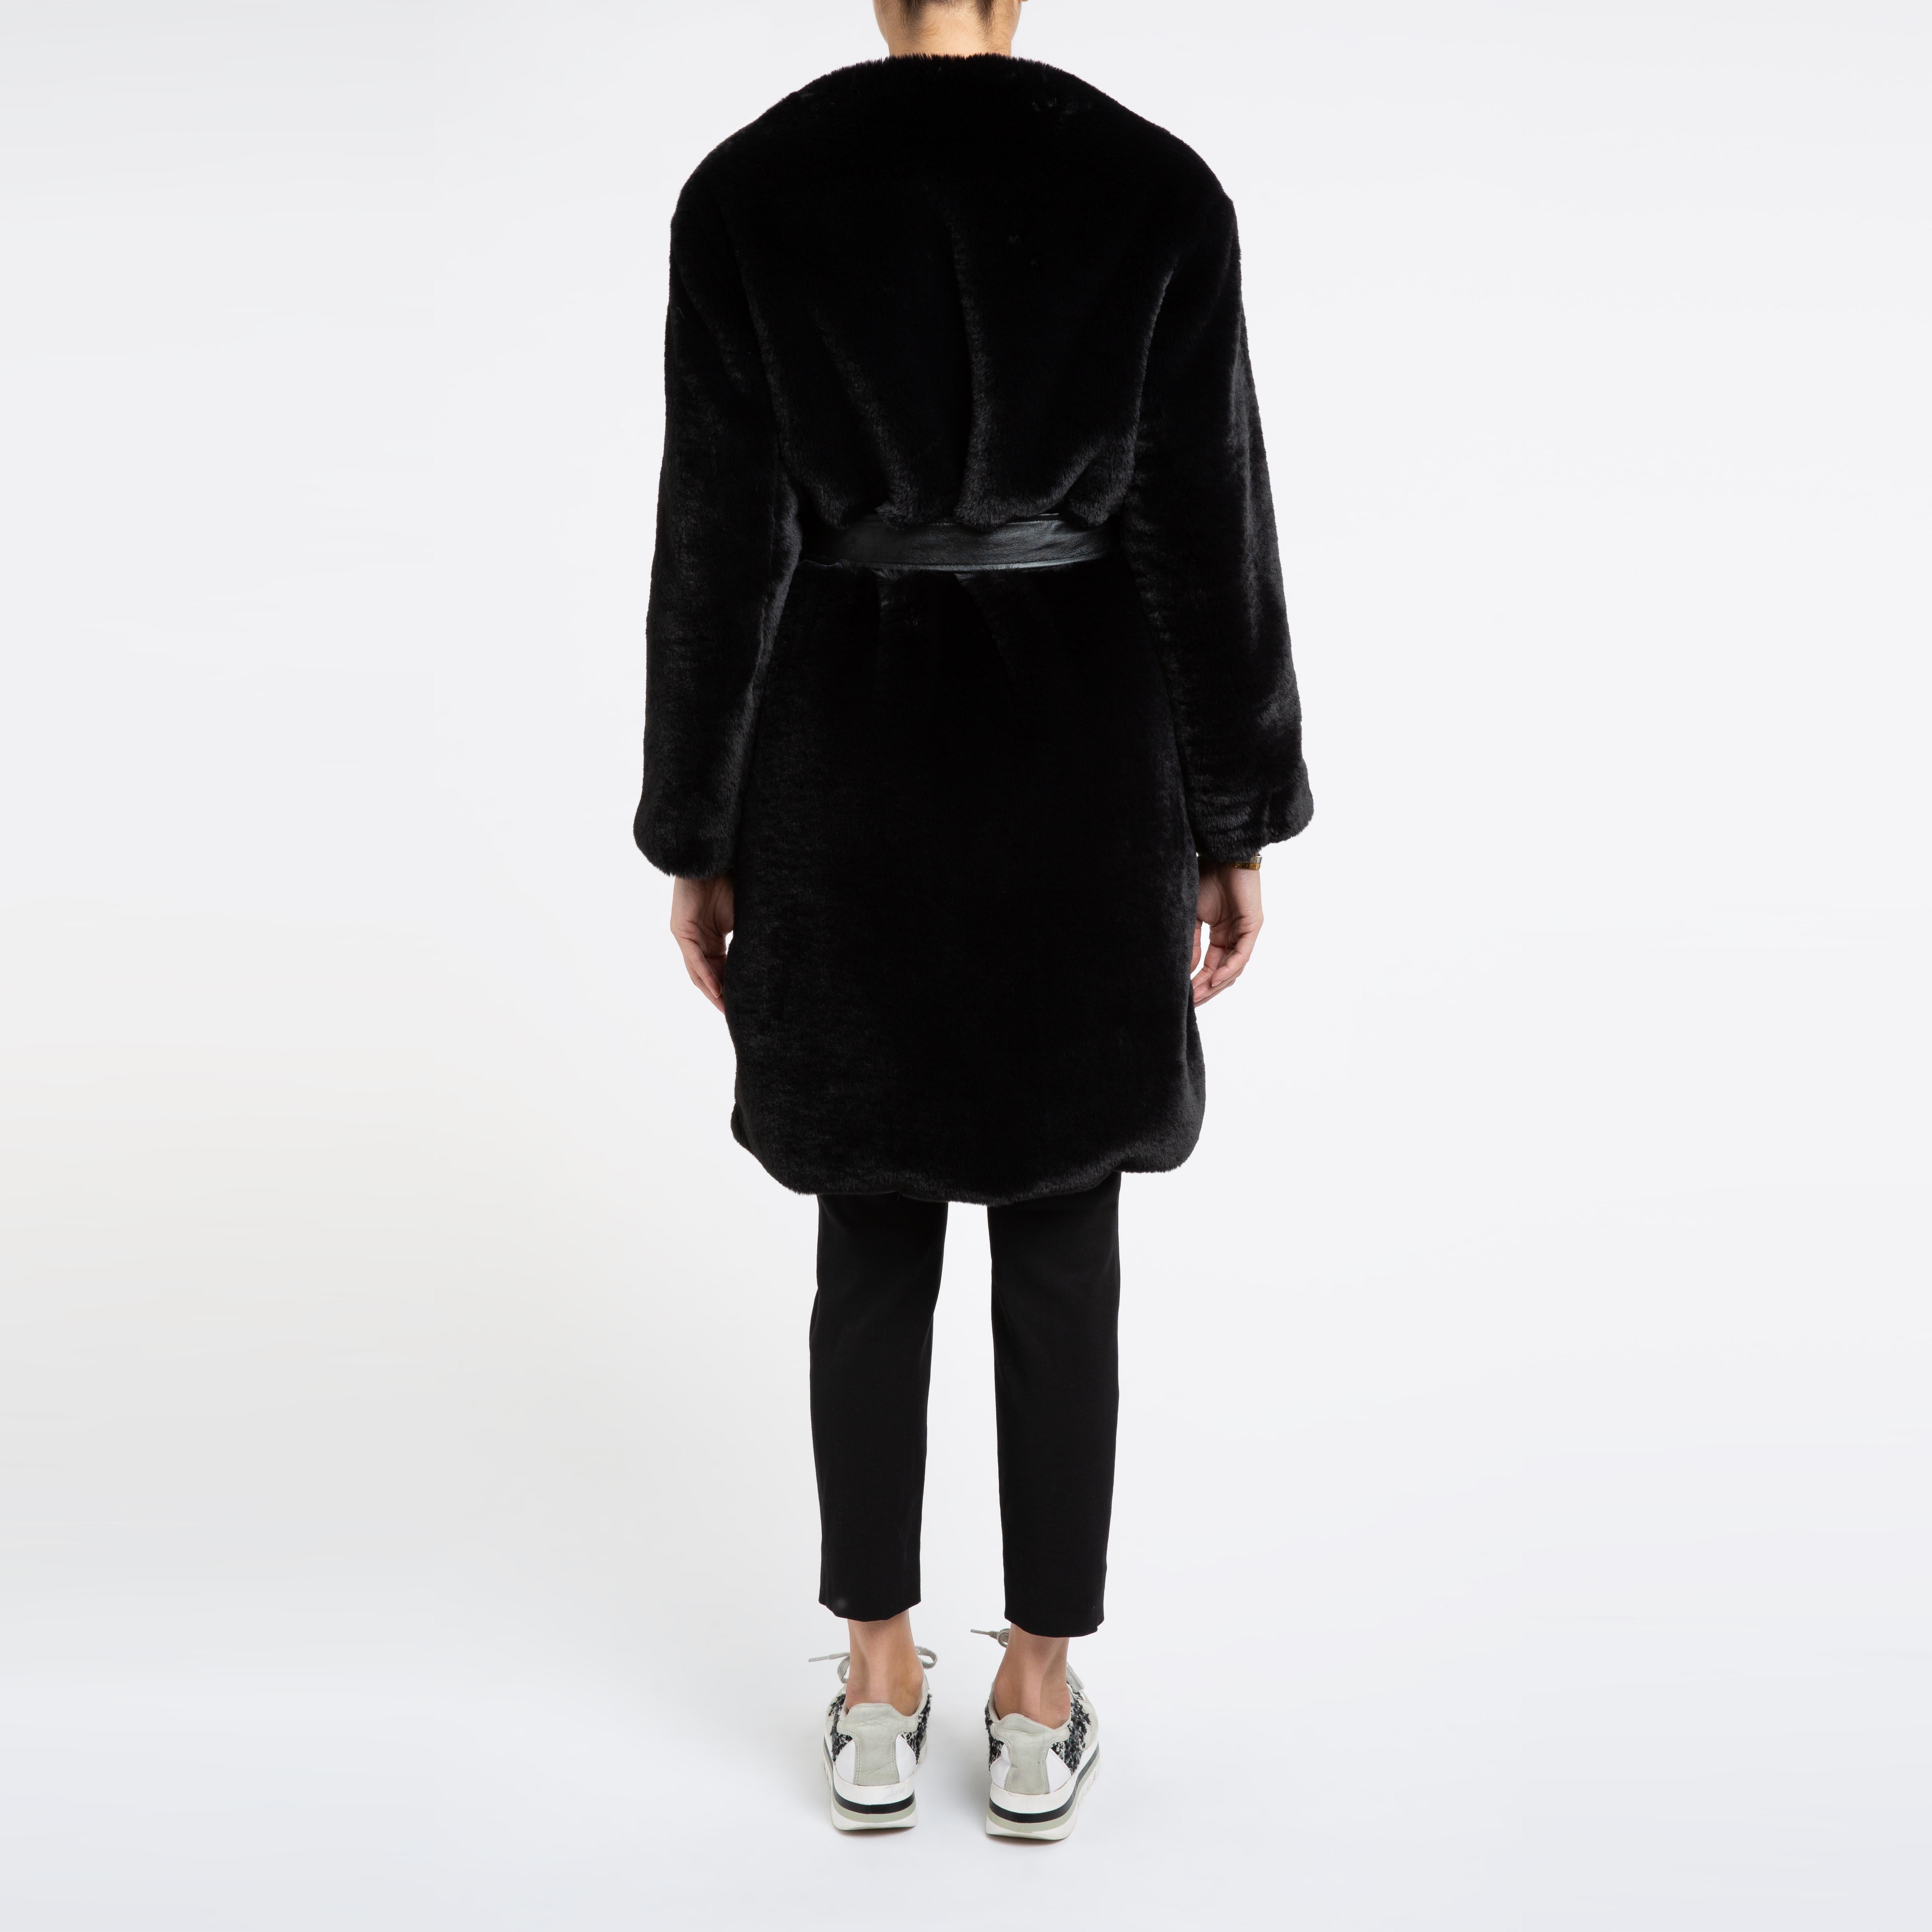 Verheyen London Serena  Collarless Faux Fur Coat in Black - Size uk 8  1